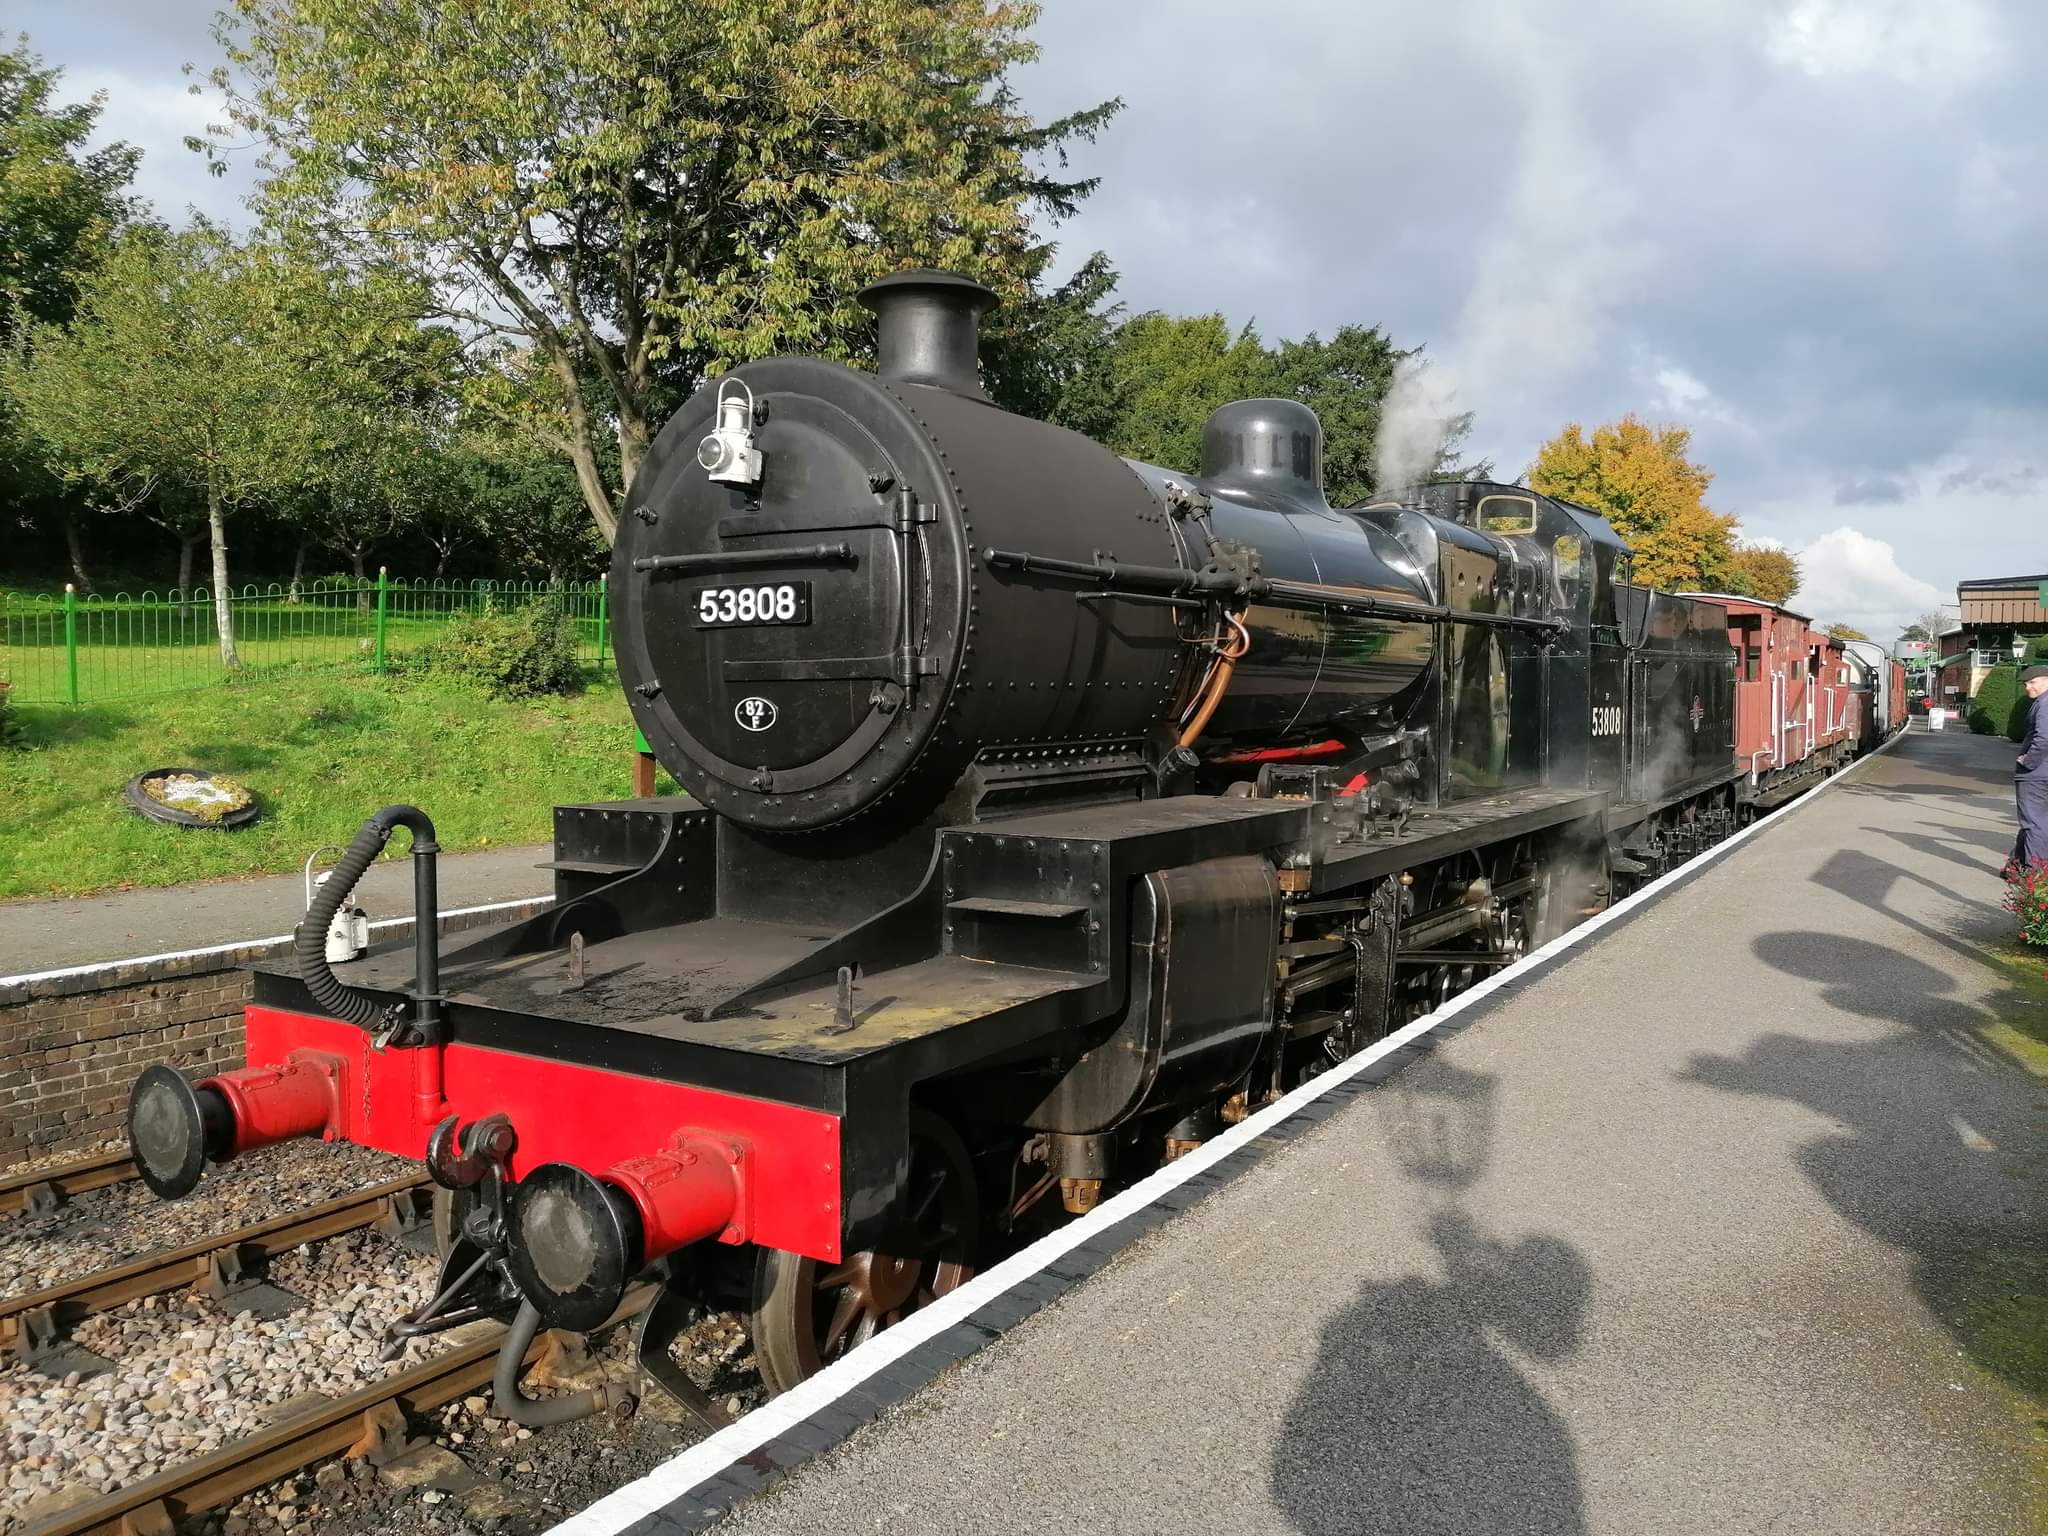 53808 at the platform at Ropley on 14 October.